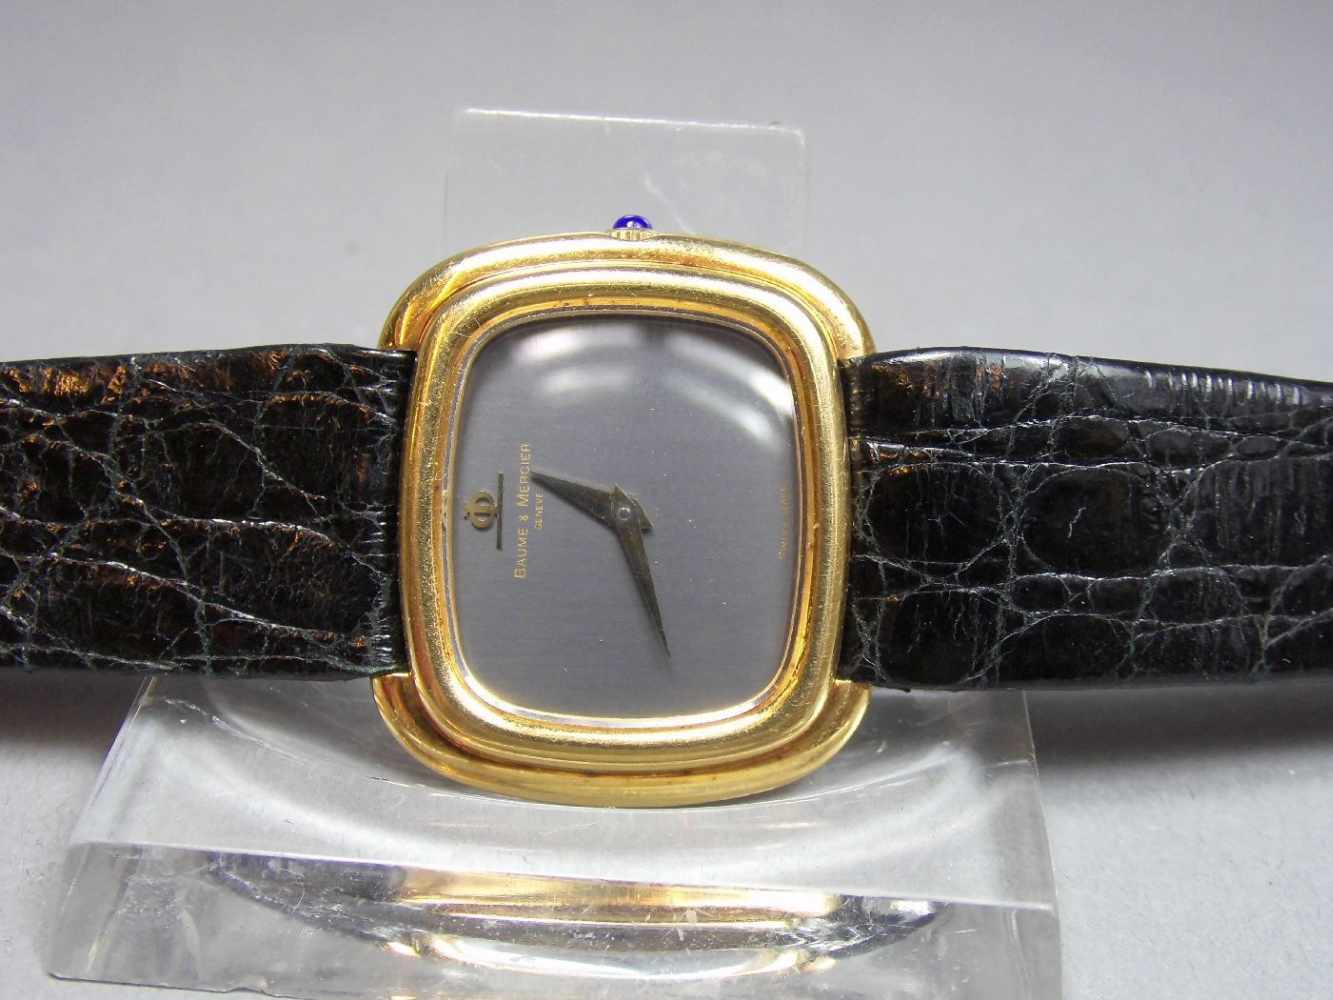 VINTAGE GOLD-ARMBANDUHR - BAUME & MERCIER GENEVE / wristwatch, 1980er Jahre, Handaufzug, - Image 3 of 7